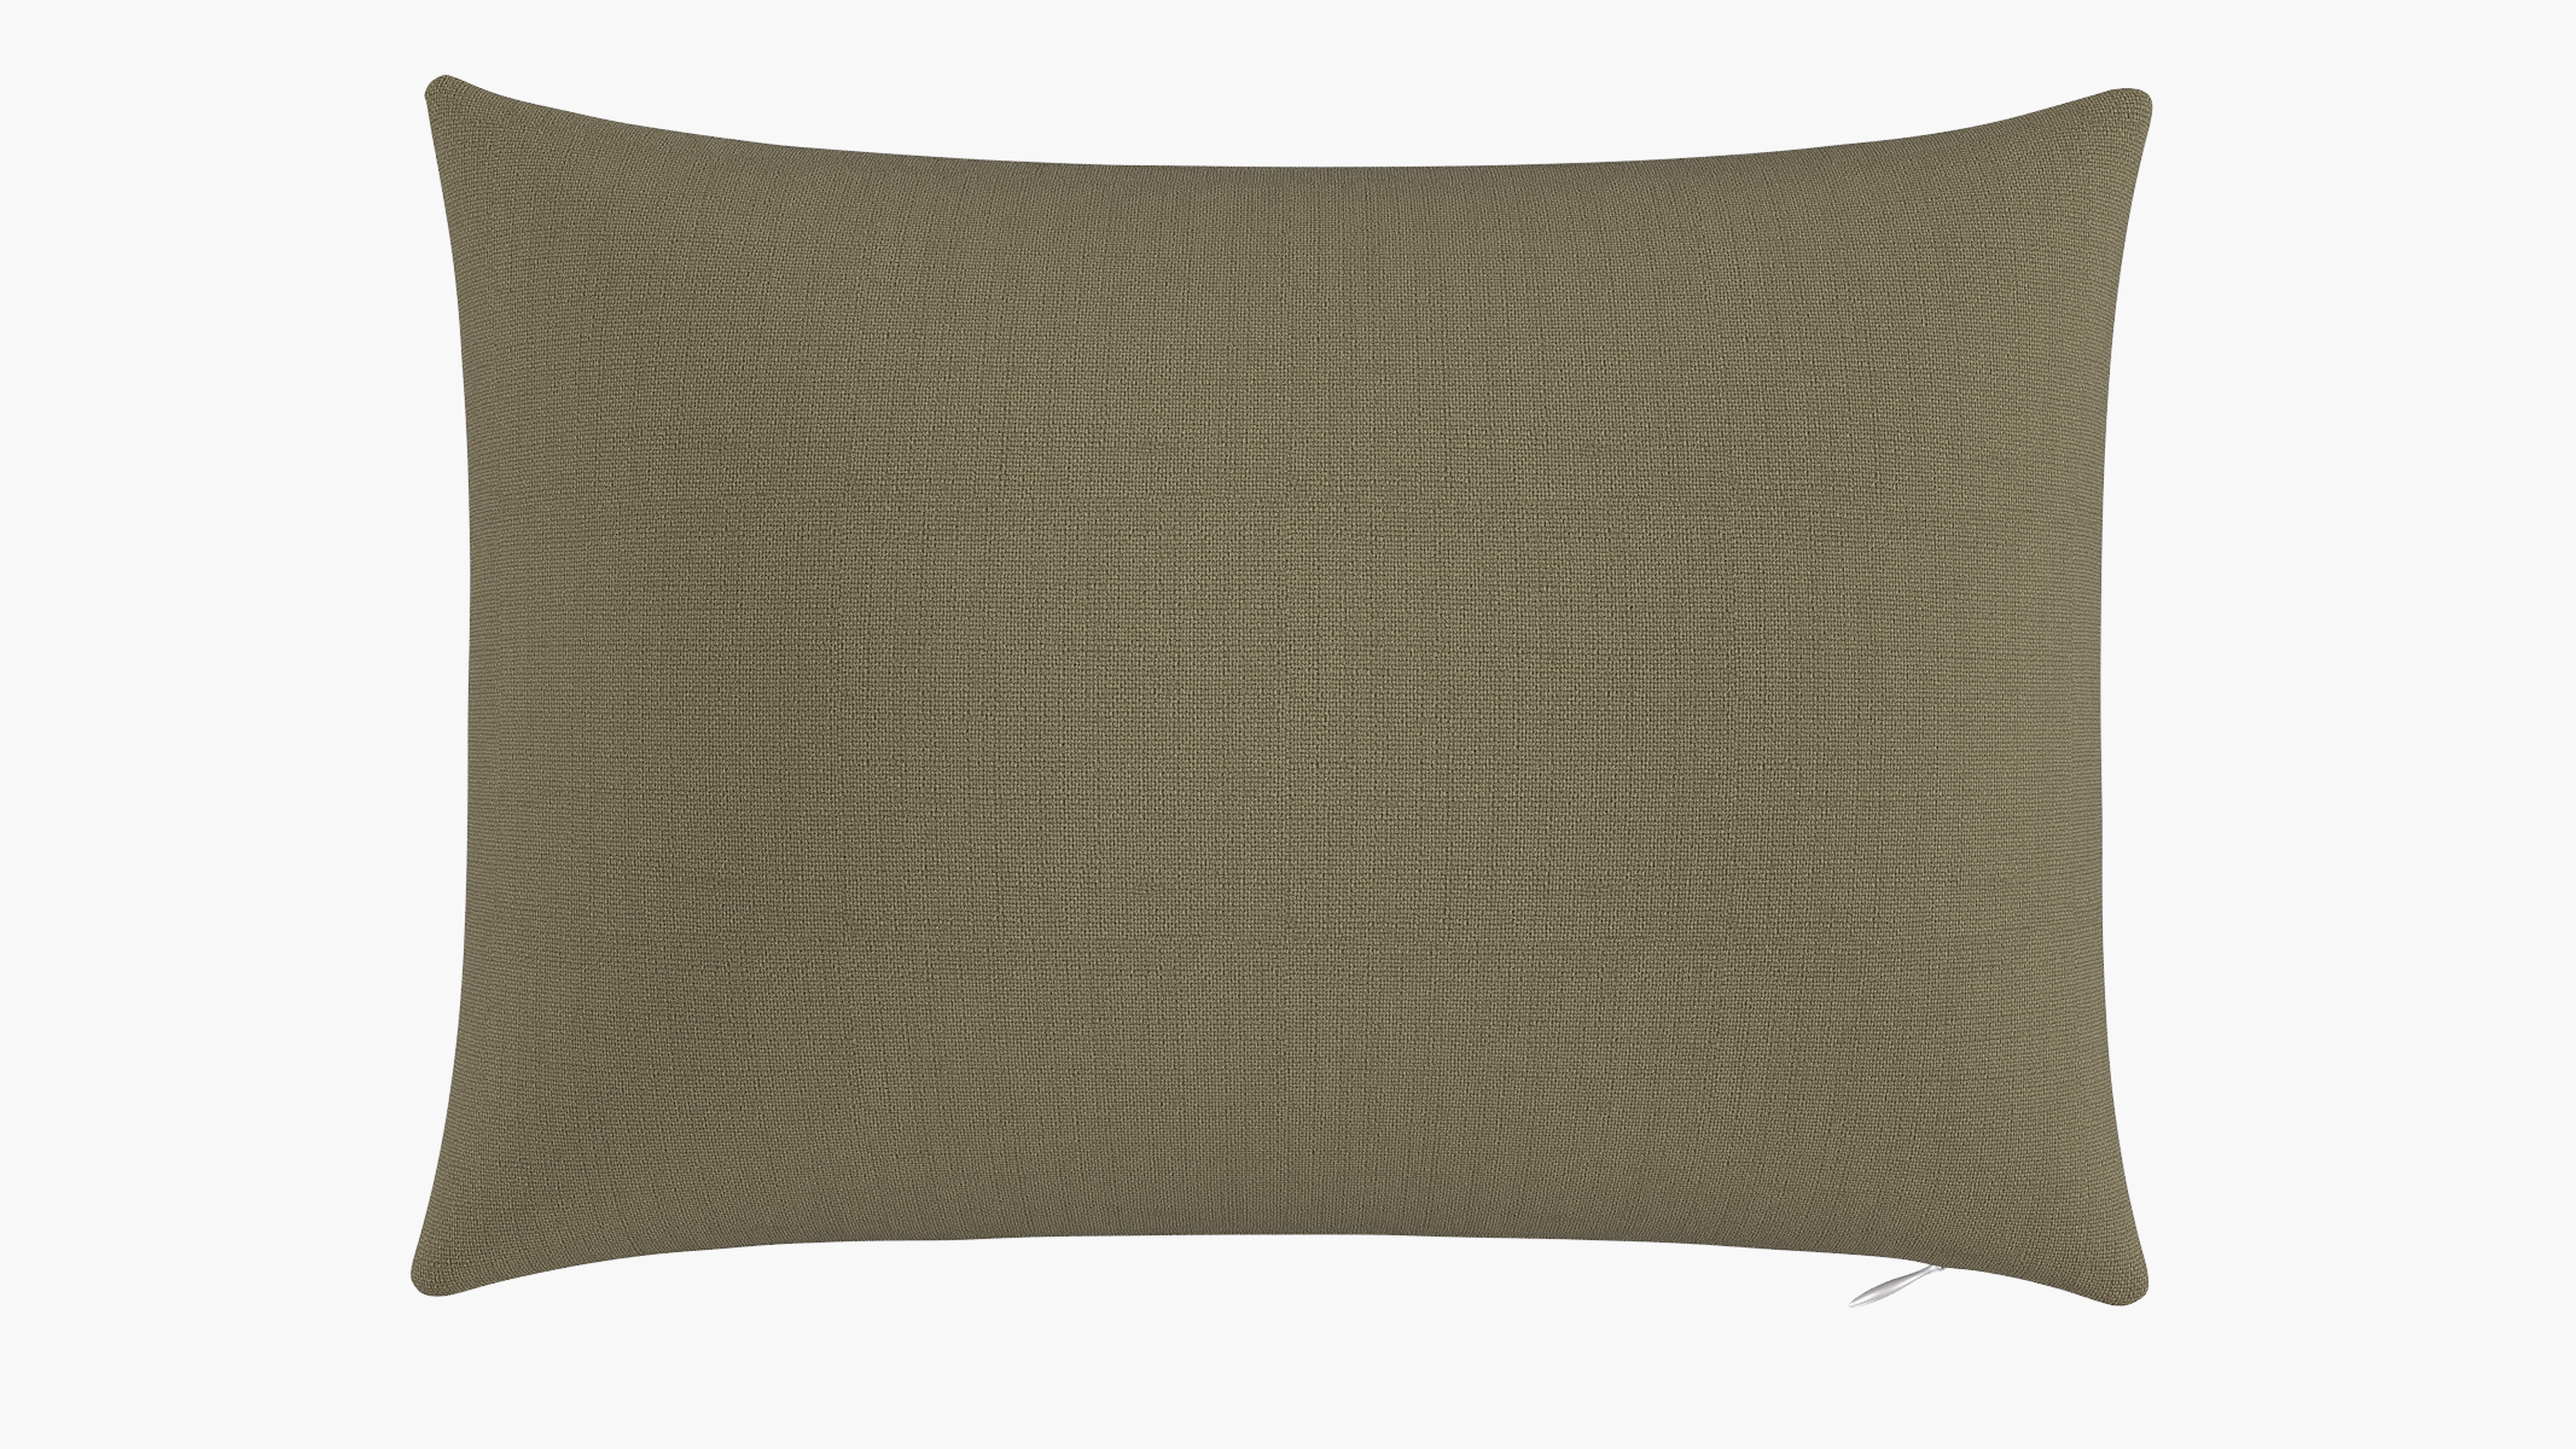 Throw Pillow 14" x 20", Olive Linen, 14" x 20" - The Inside